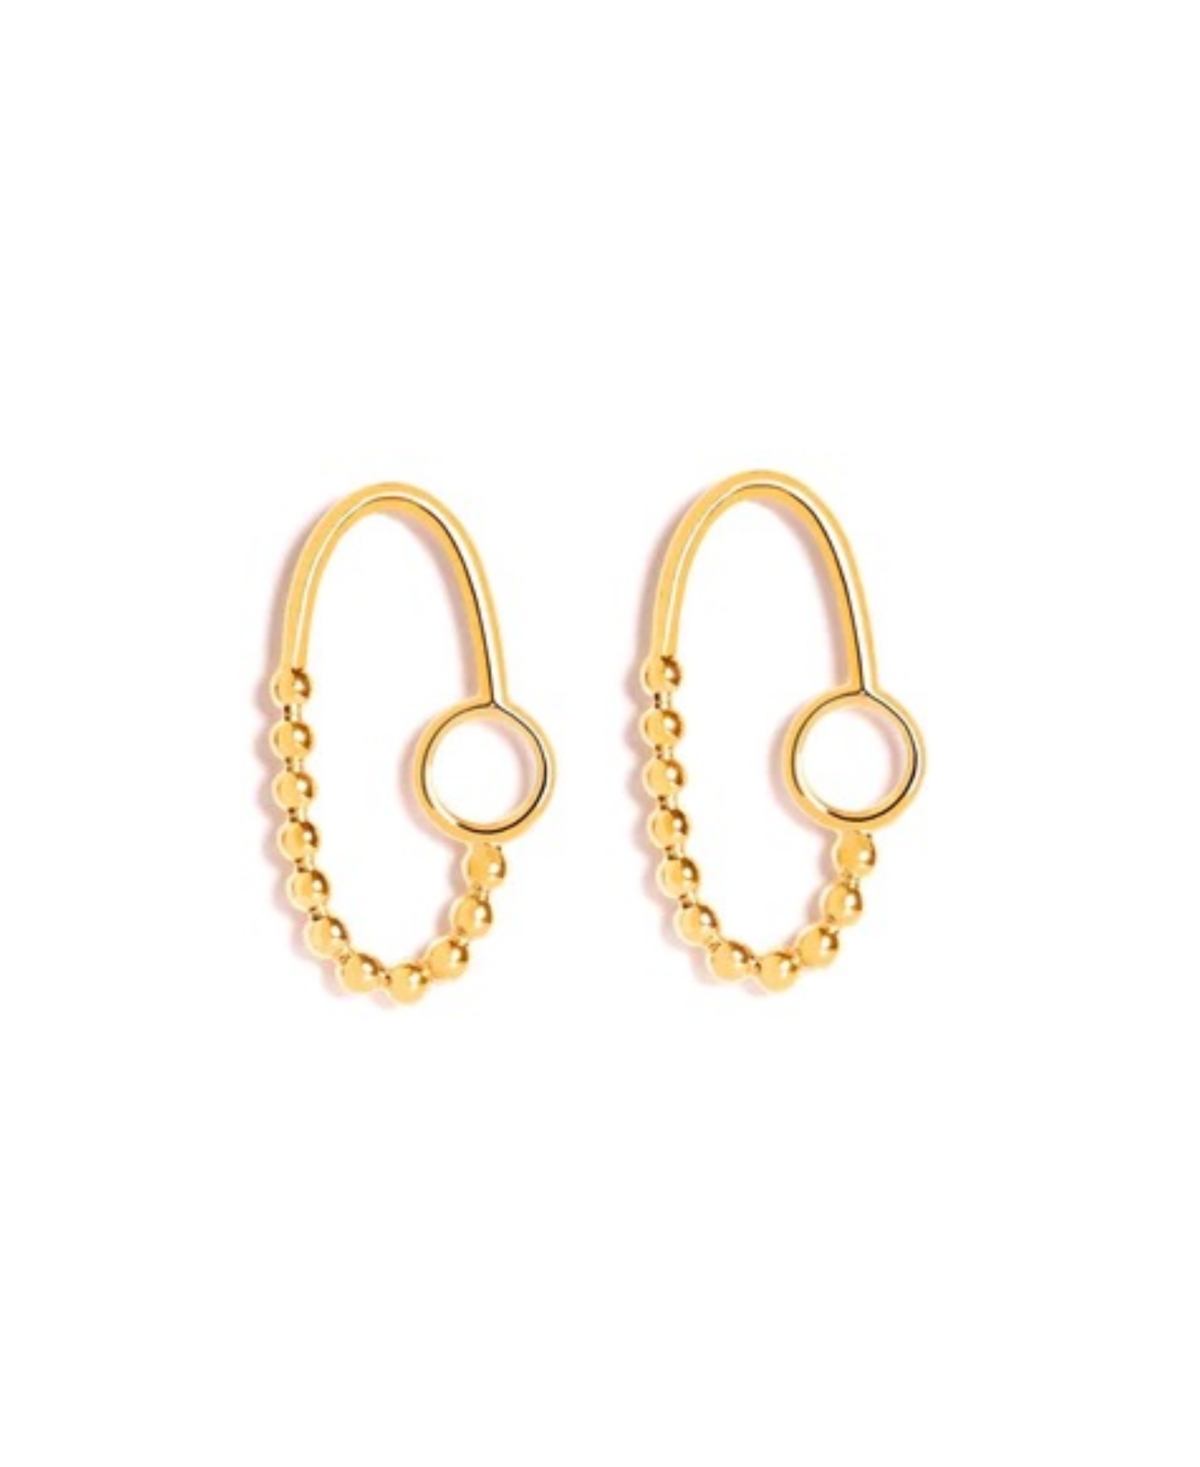 Beaded Oval Hoop Earrings - Gold